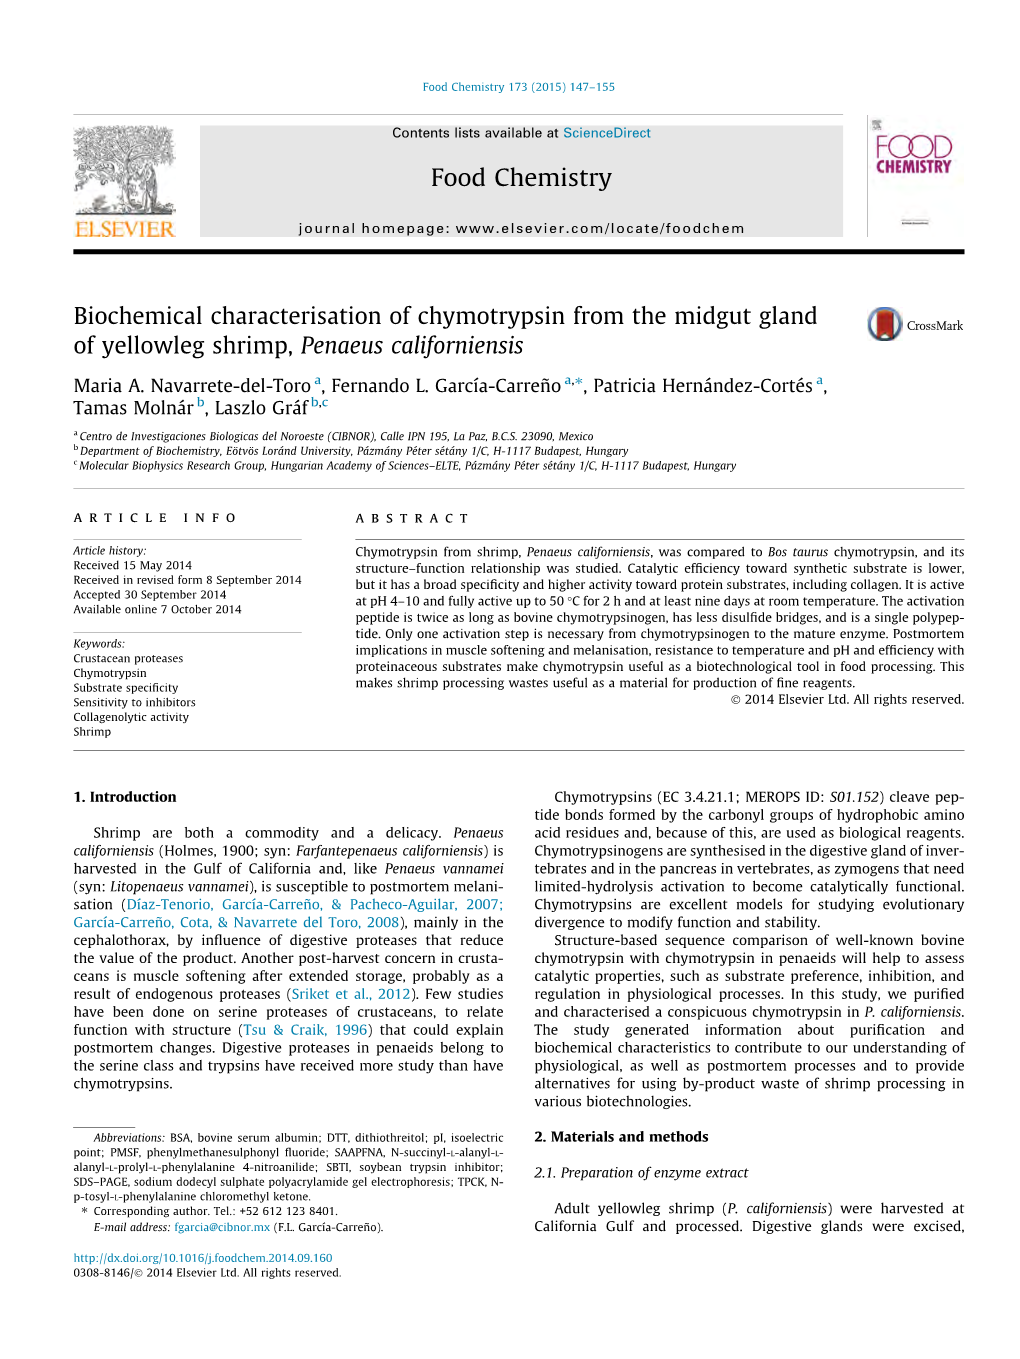 Biochemical Characterisation of Chymotrypsin from the Midgut Gland of Yellowleg Shrimp, Penaeus Californiensis ⇑ Maria A